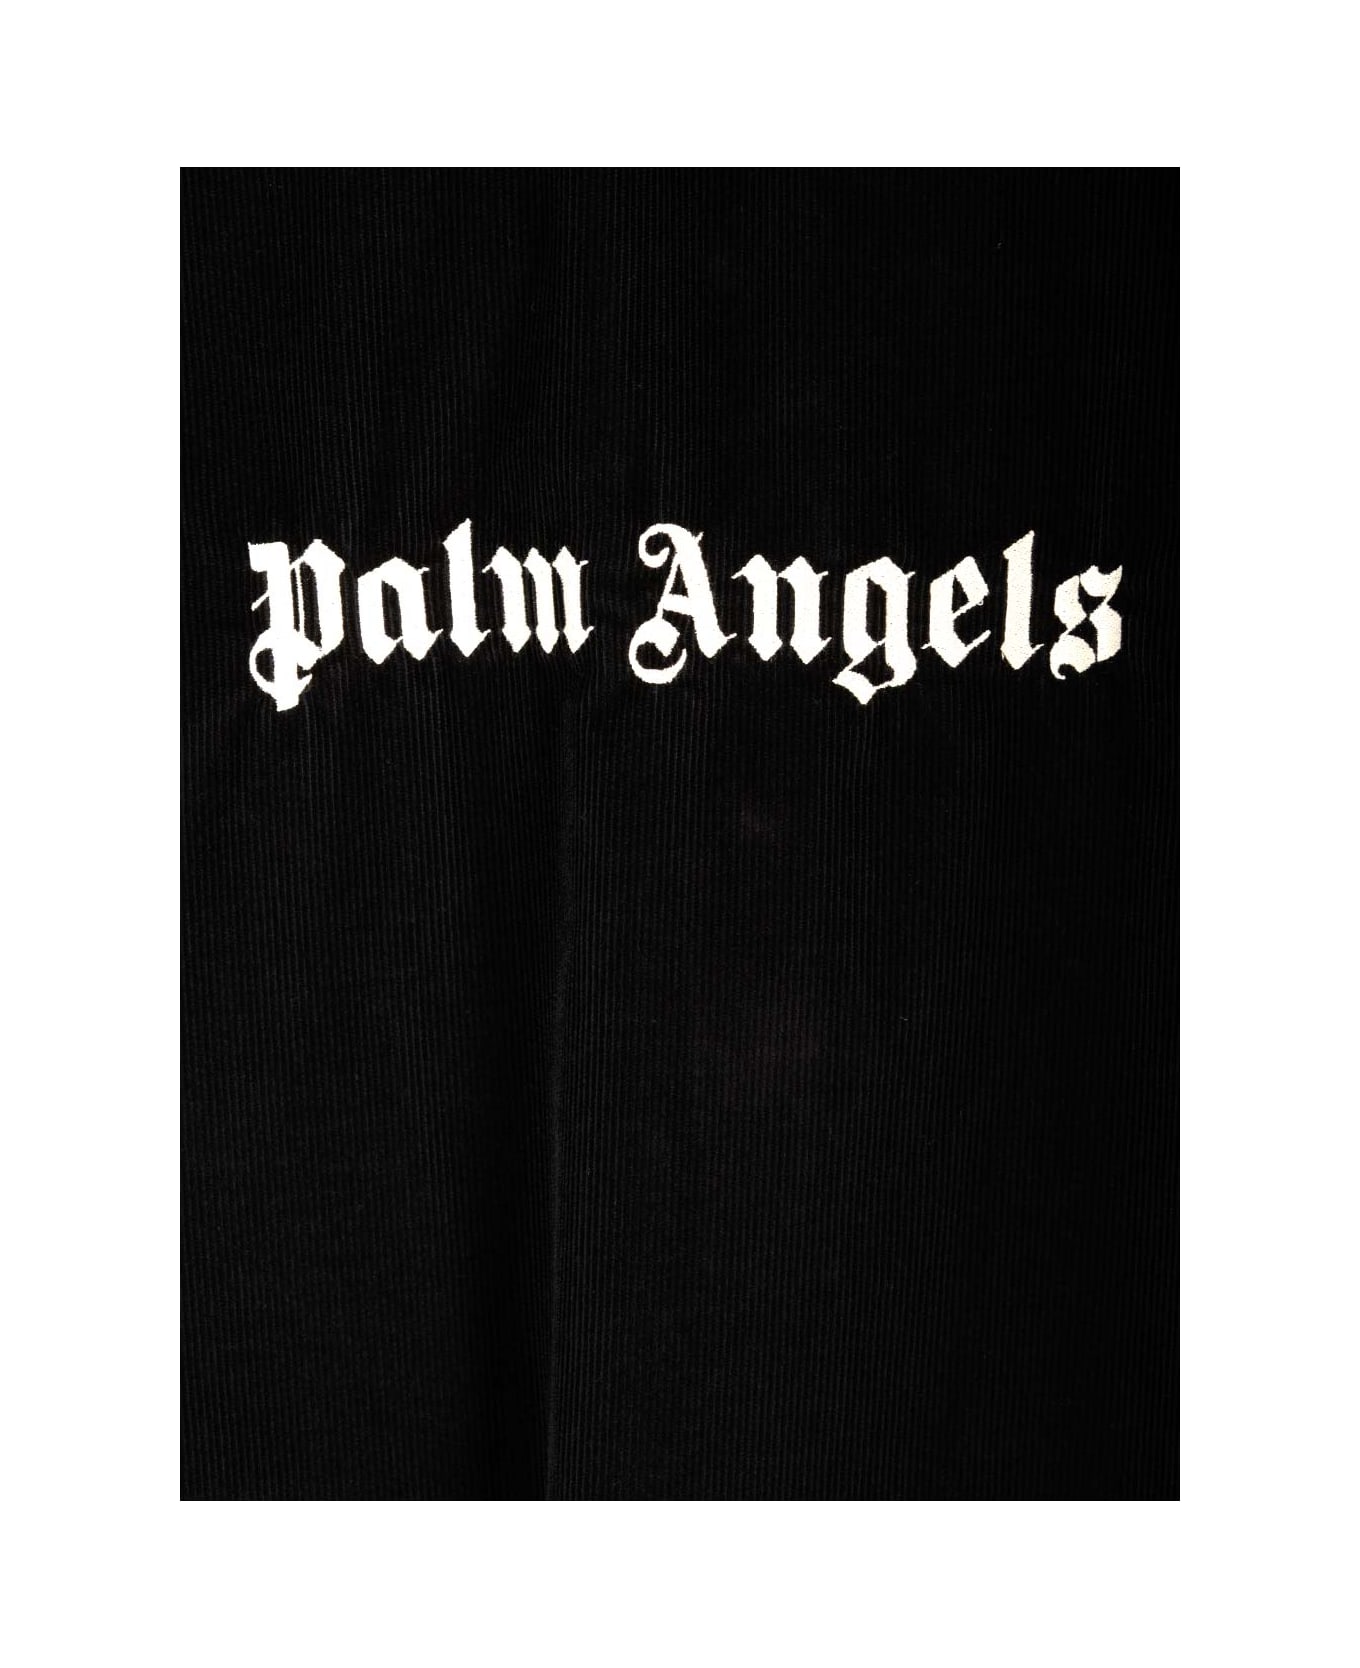 Palm Angels Velvet Overshirt With Logo - Black